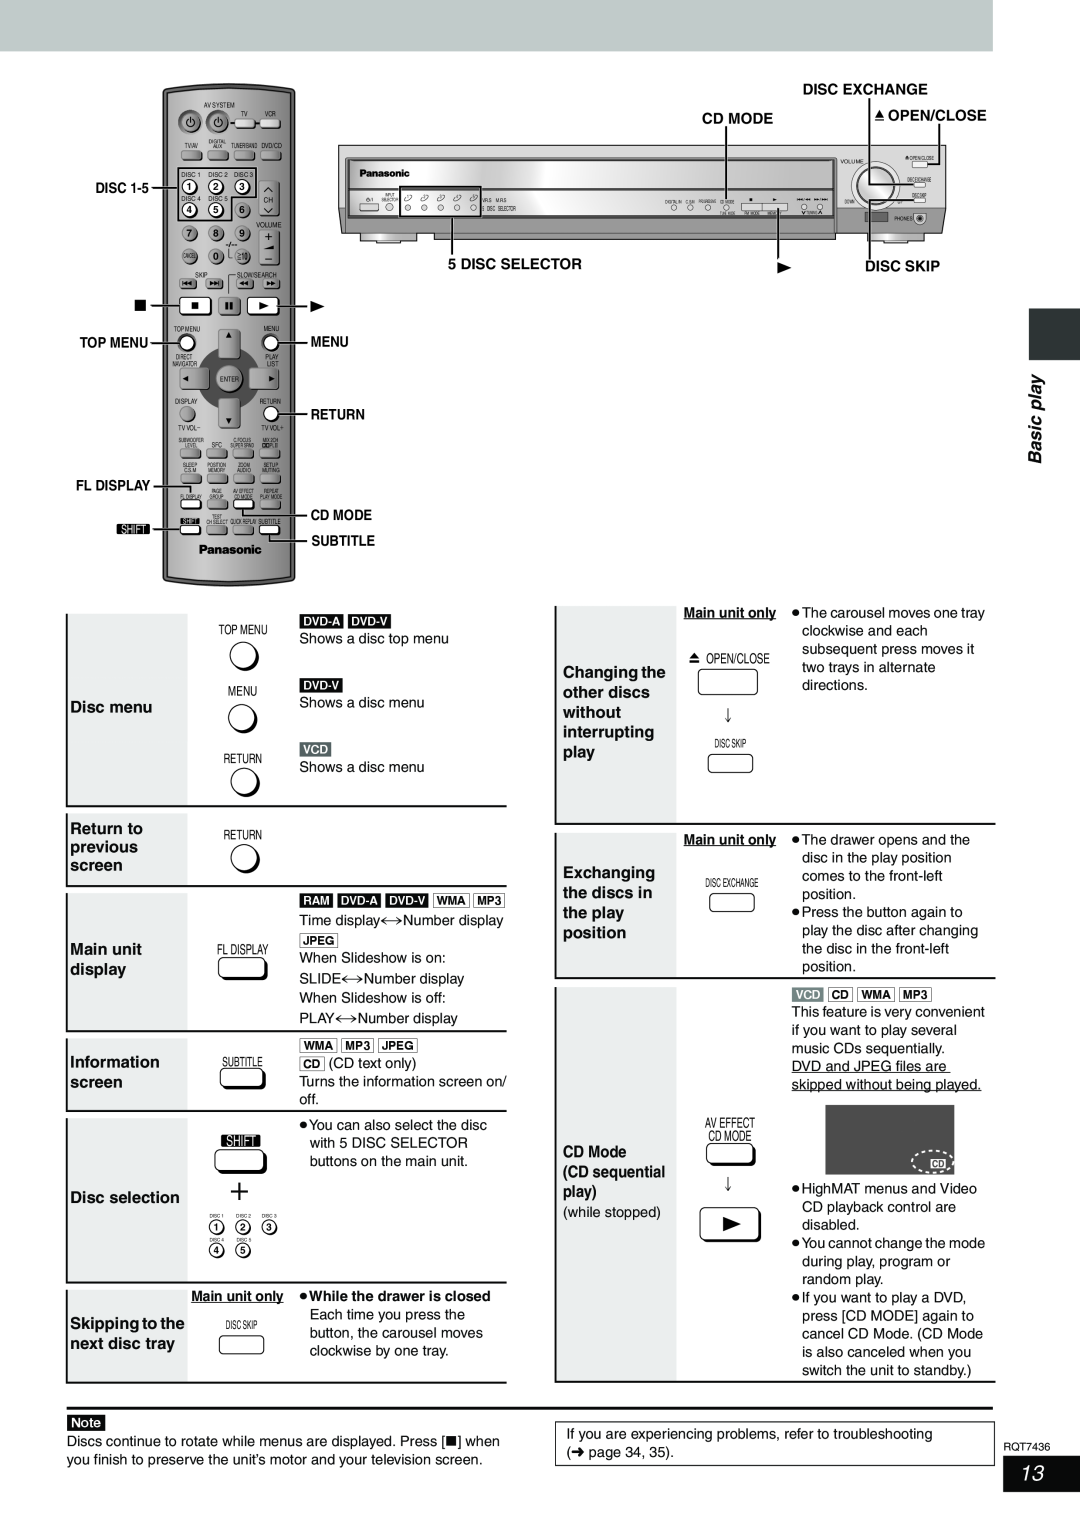 Panasonic SC-HT928 Basic play, Disc menu, Return to, previous, screen, Main unit, display, Information, Disc selection 